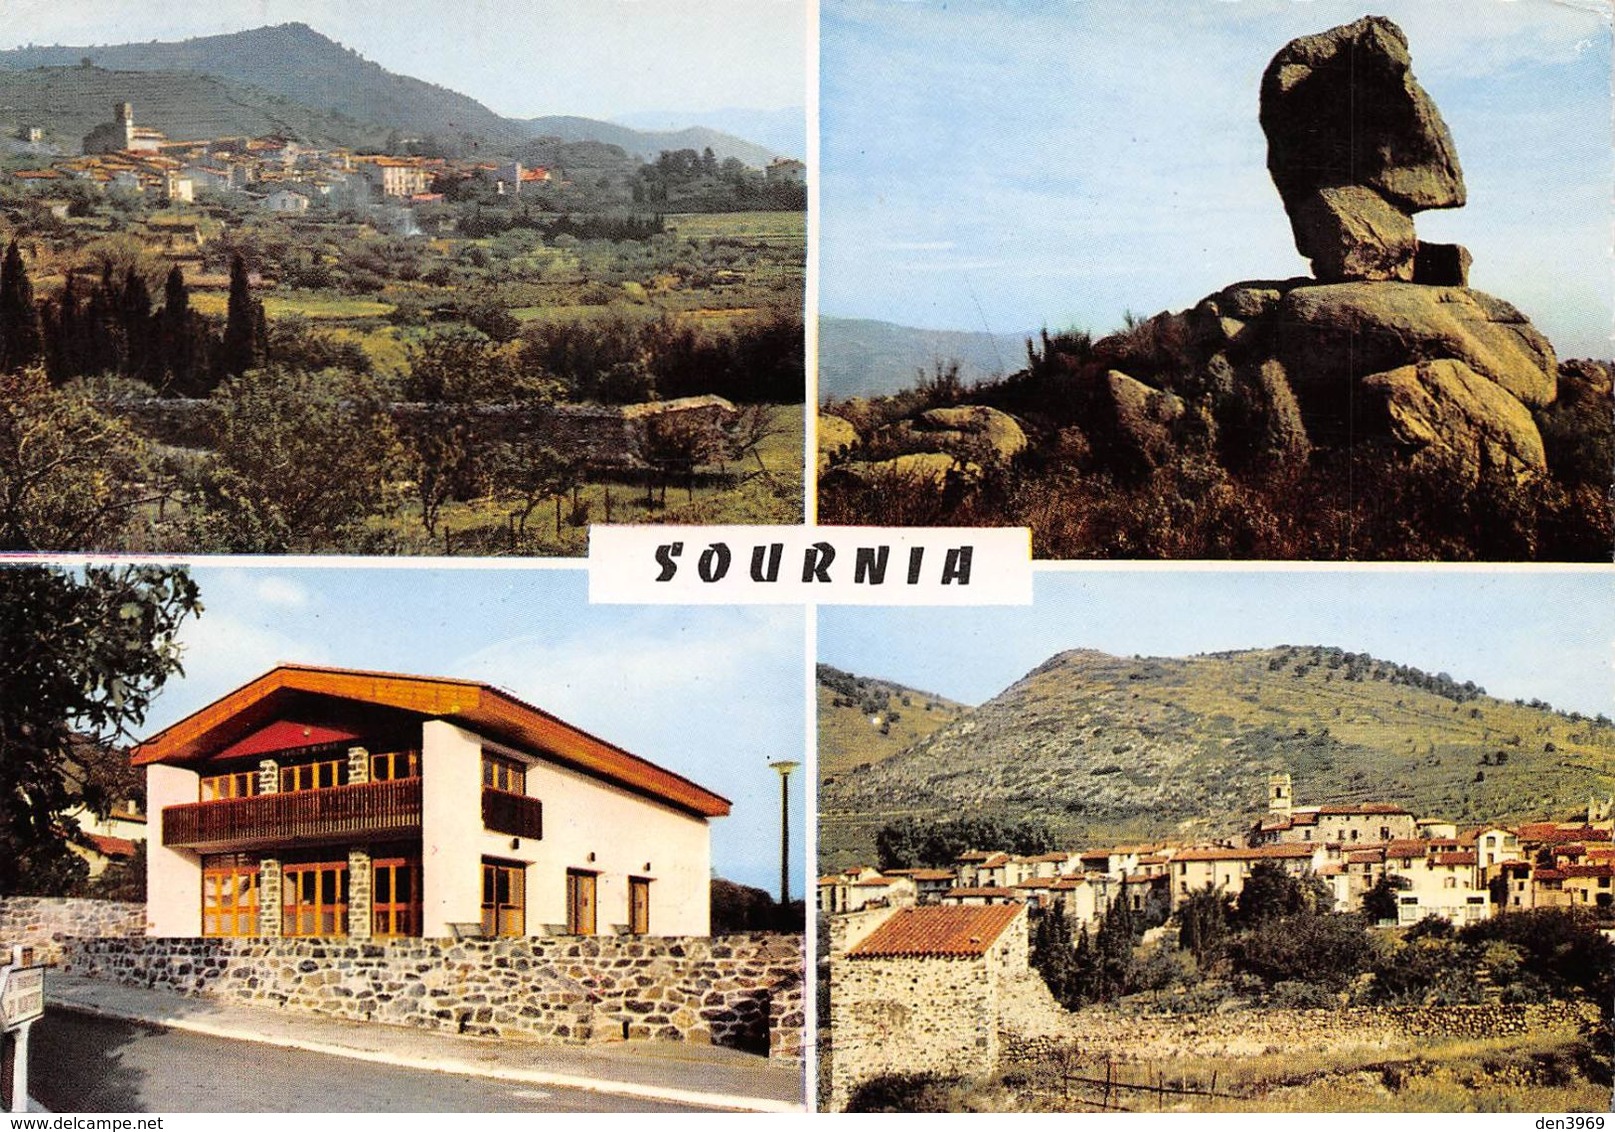 SOURNIA - Vues Générales - Le Rocher Cornu - Le Foyer Rural - Sournia